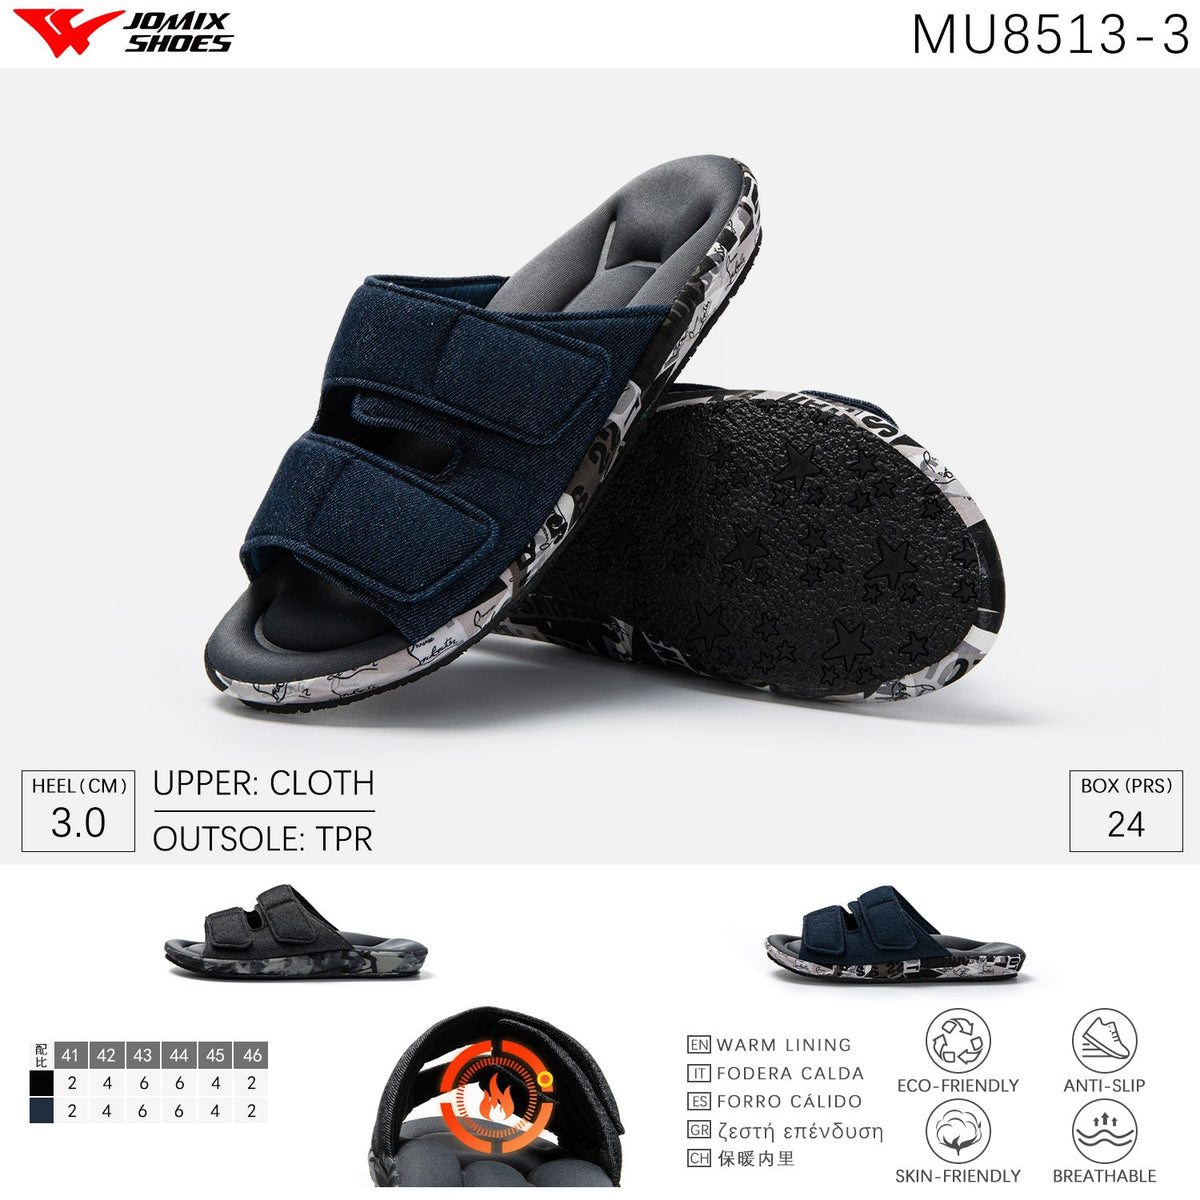 Pantofole da uomo Jomix Shoes MU8513 - 3